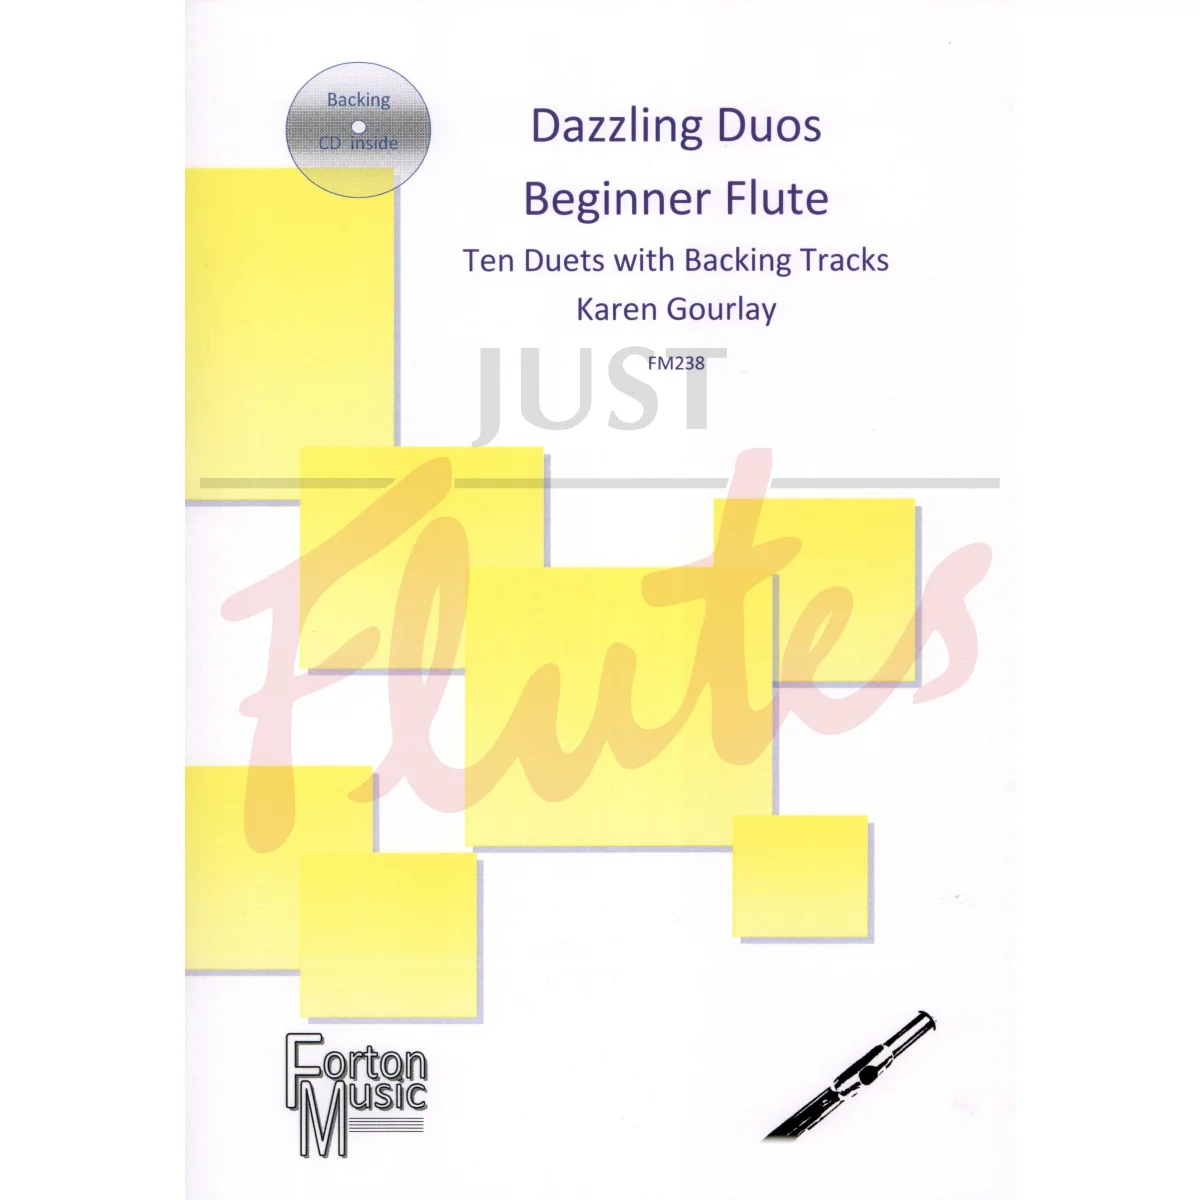 Dazzling Duos for Beginner Flute